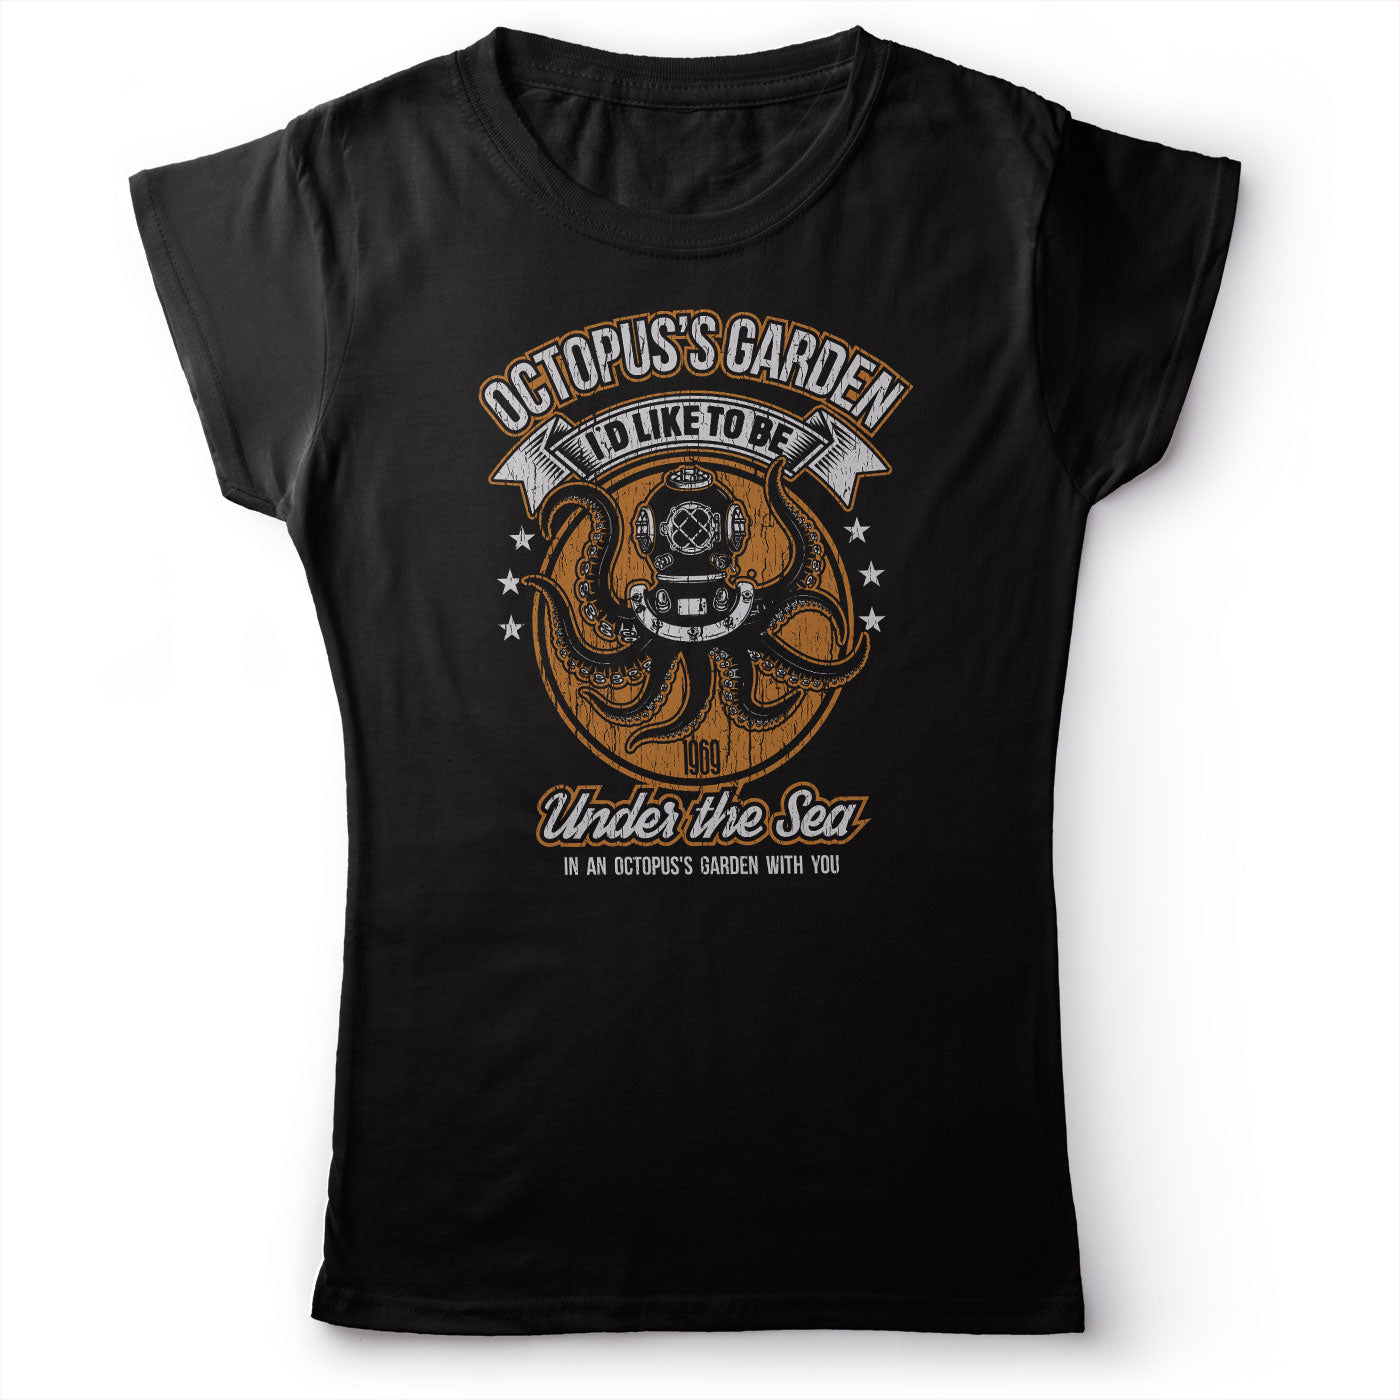 The Beatles - Octopus's Garden - Men's T-Shirt Black 2